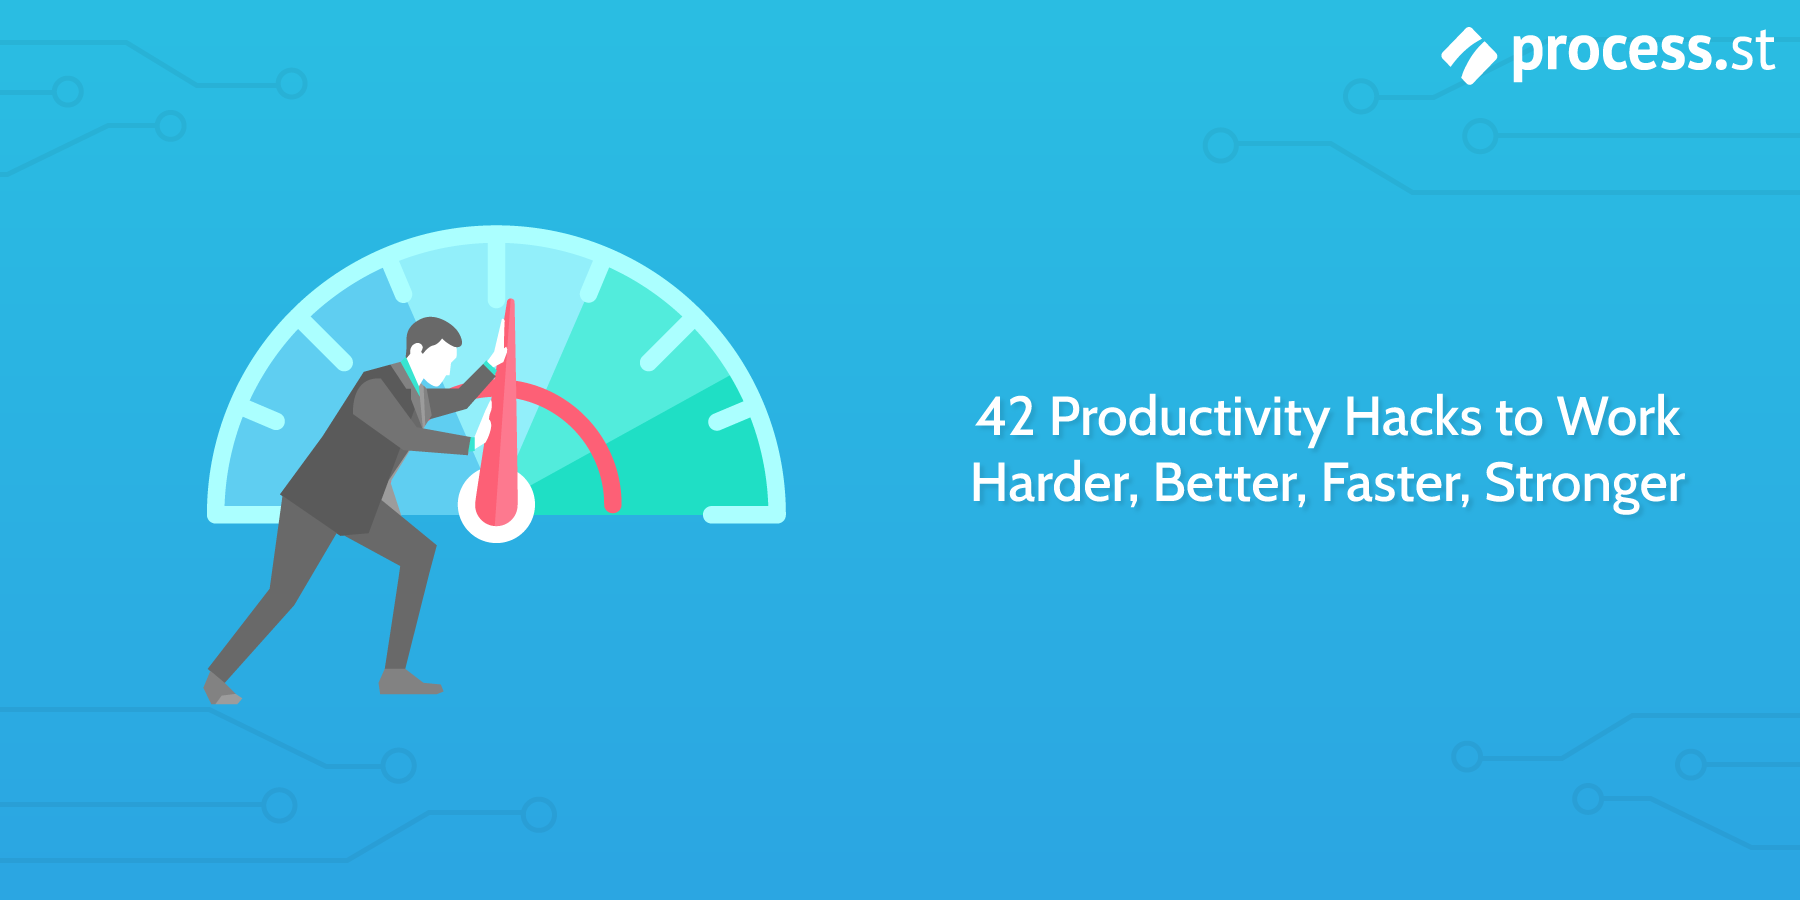 42 Productivity Hacks to Work Harder, Better, Faster, Stronger